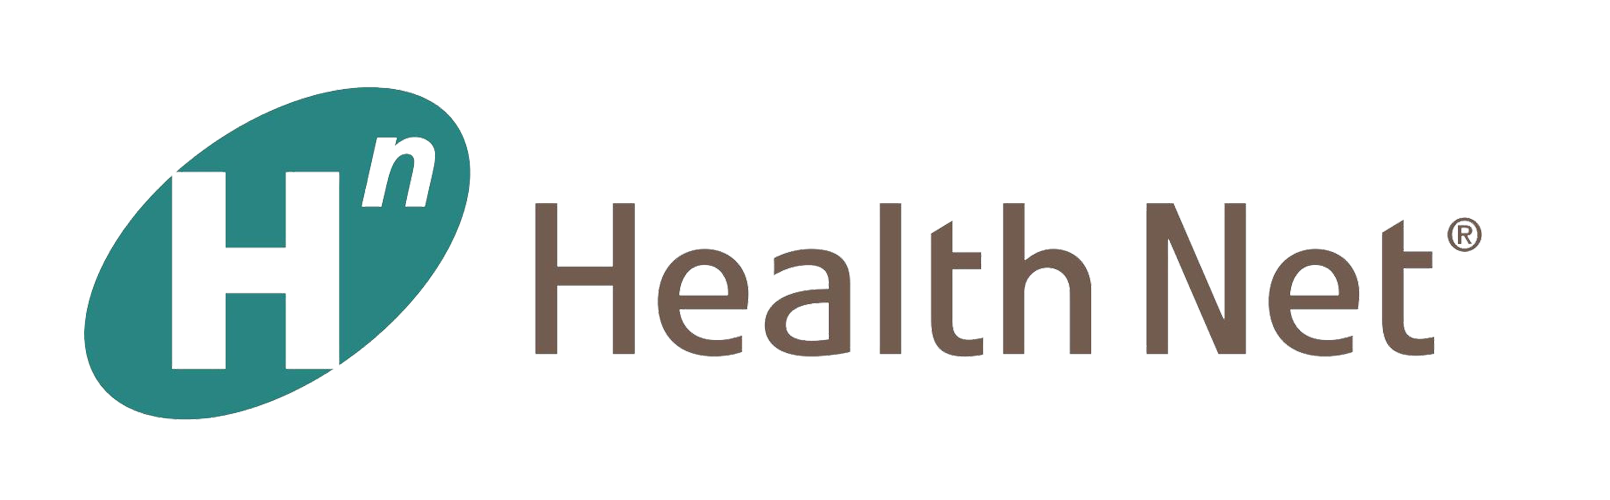 Insurance-Healthnet